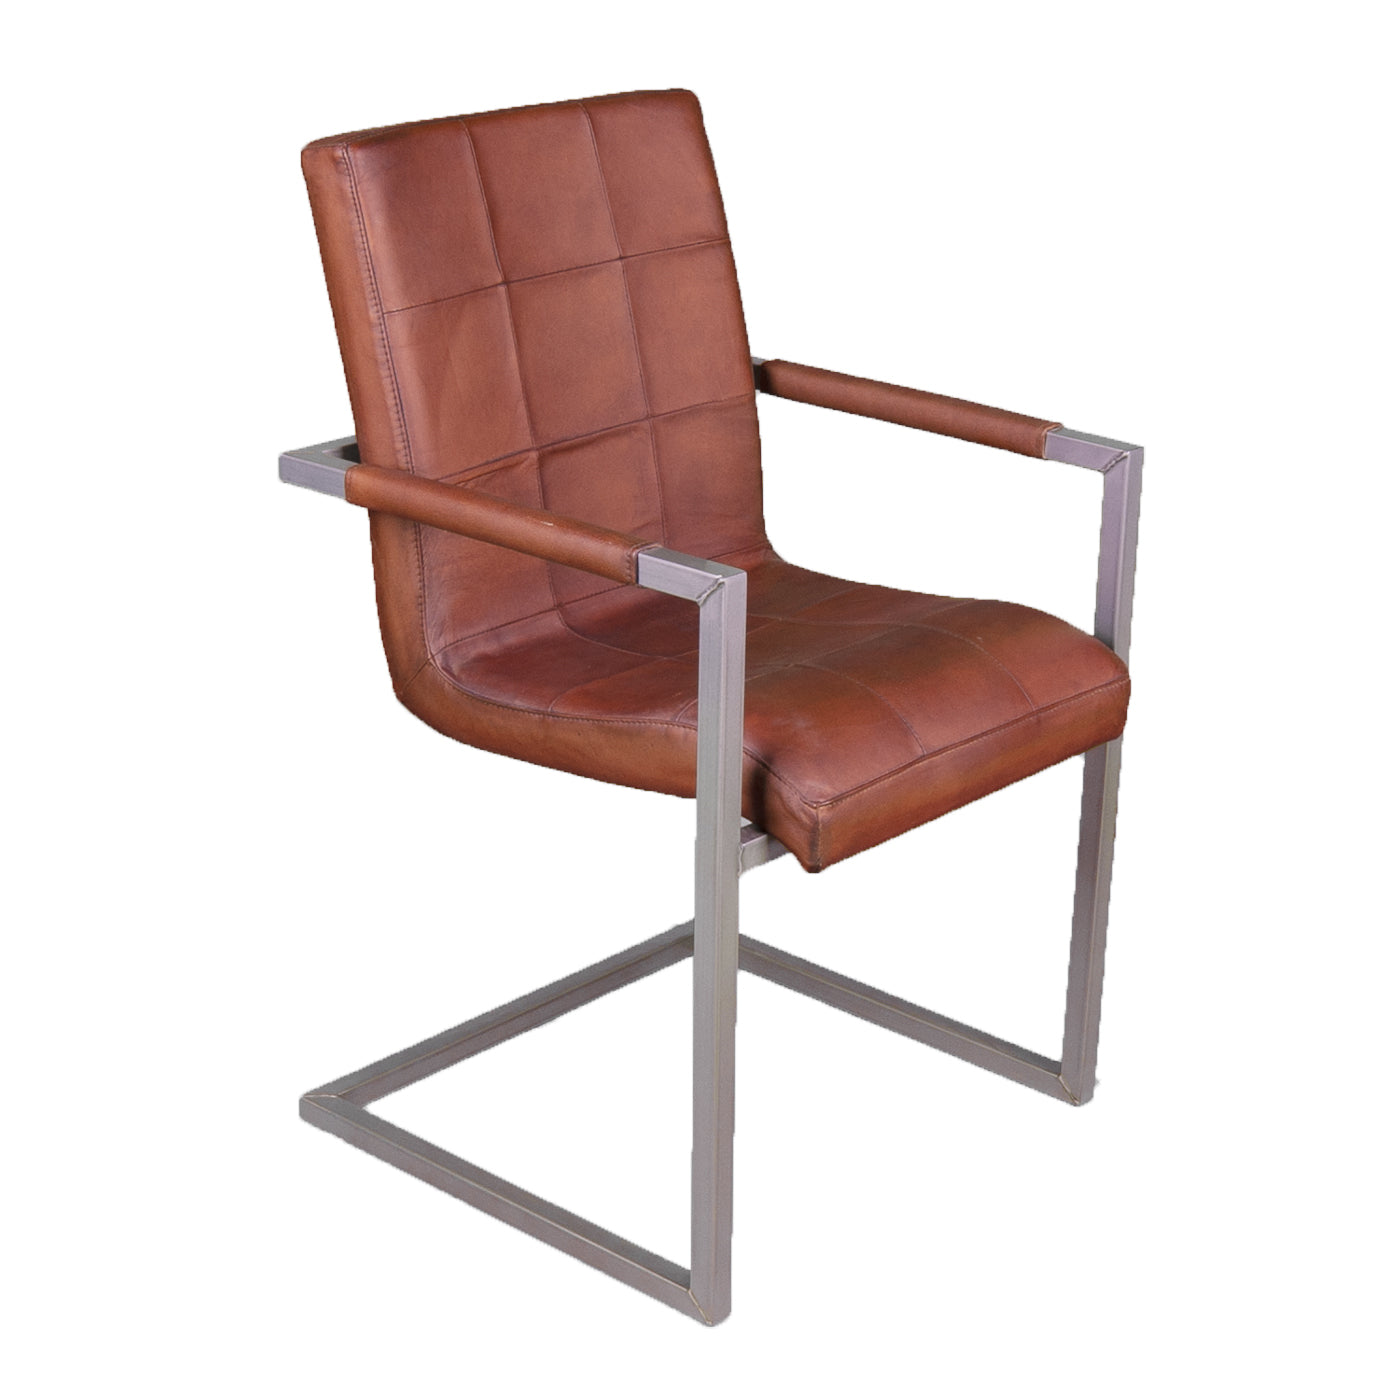 scaun vintage coniac